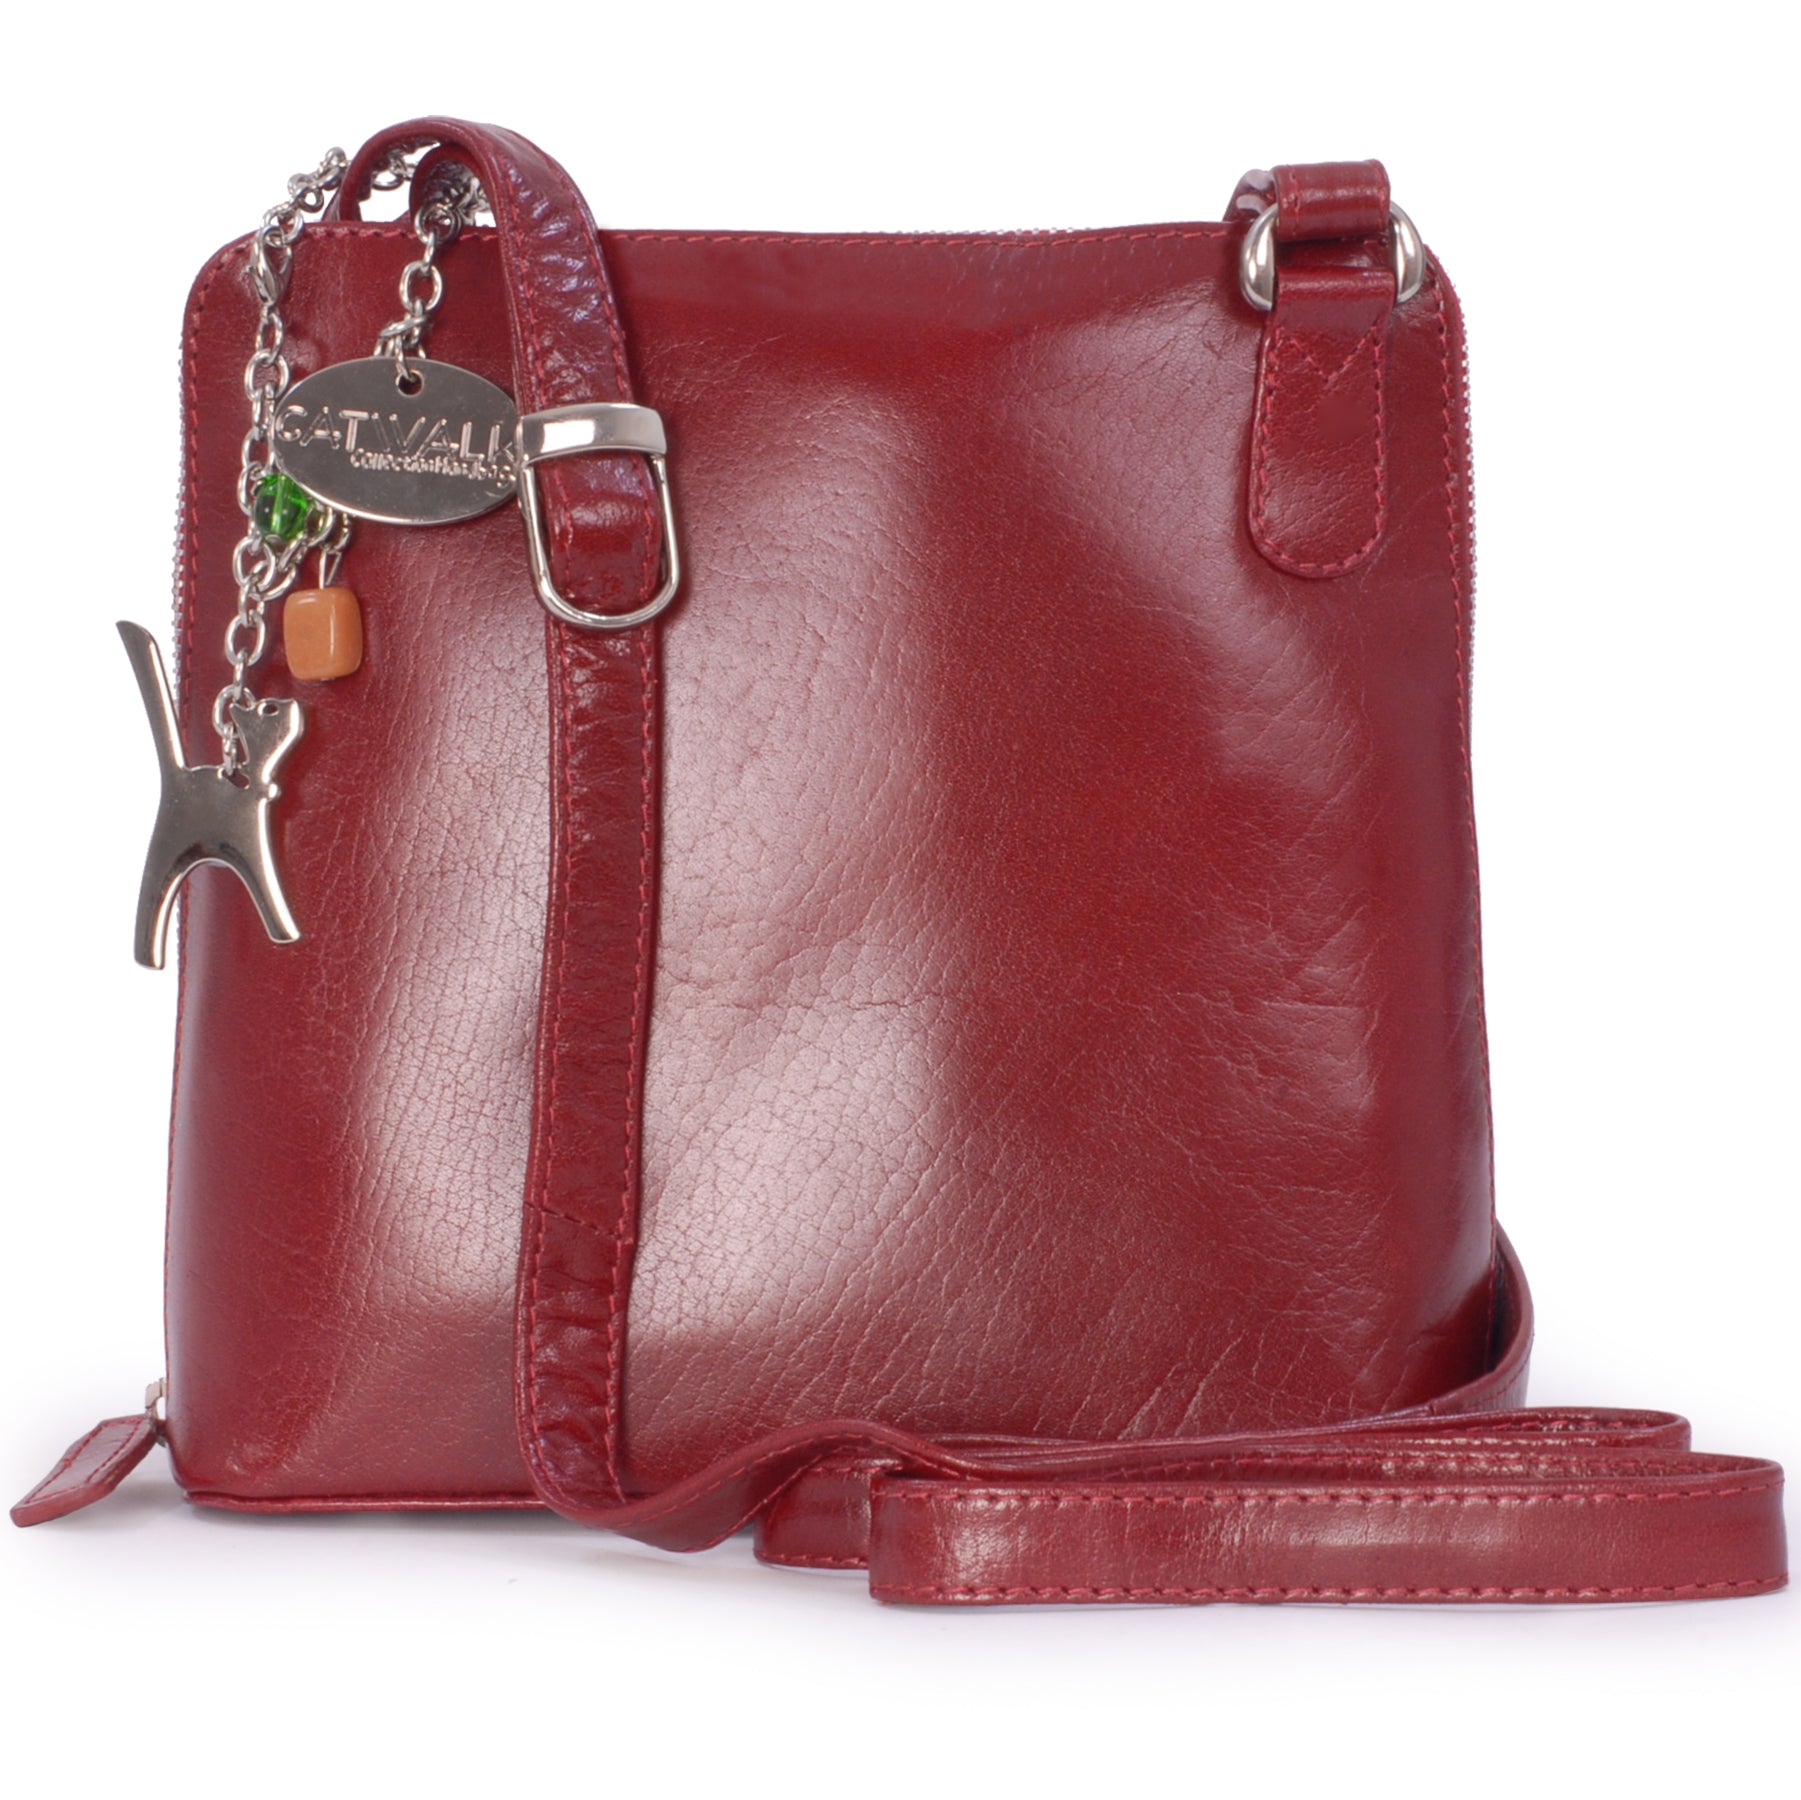 BHLB-LB005-Red HiLEDER Pure Leather Handbag Shoulder Tote Purse Messenger  Bag at Rs 1859 | Women Leather Handbags in Kolkata | ID: 2850801884233